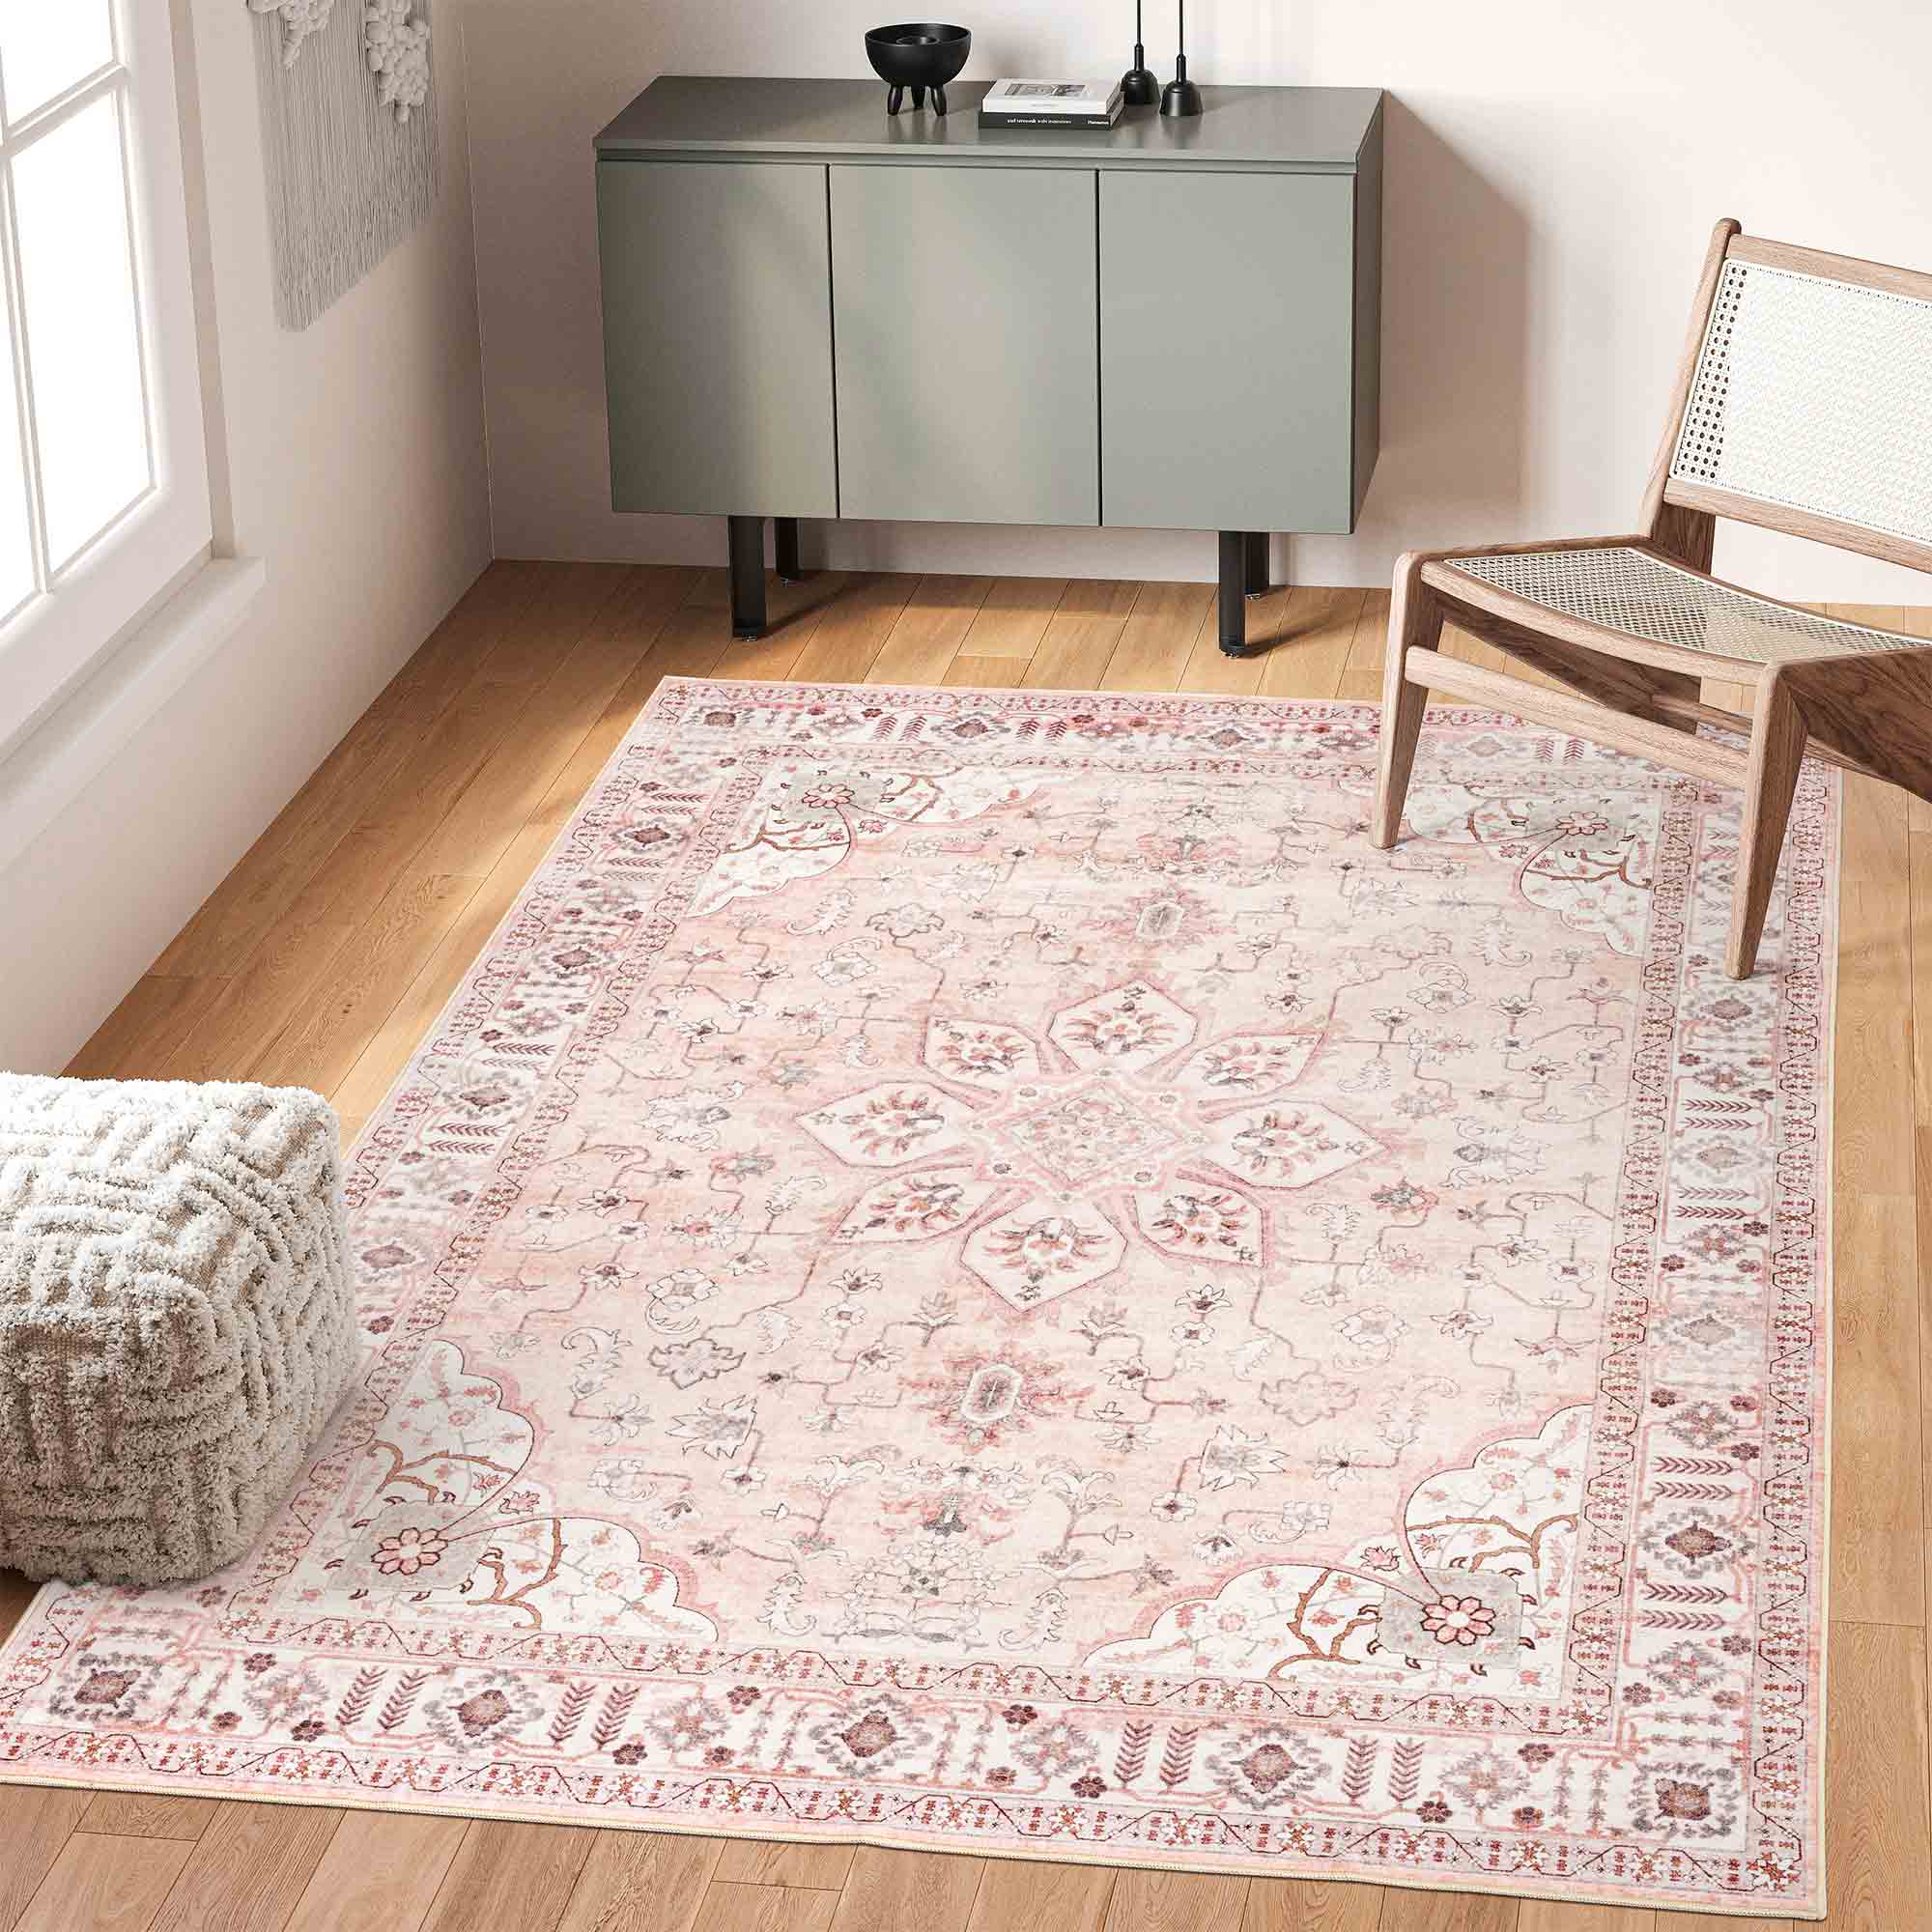 ComiComi 5x7 Carpet for Living Room Arghavan Pink